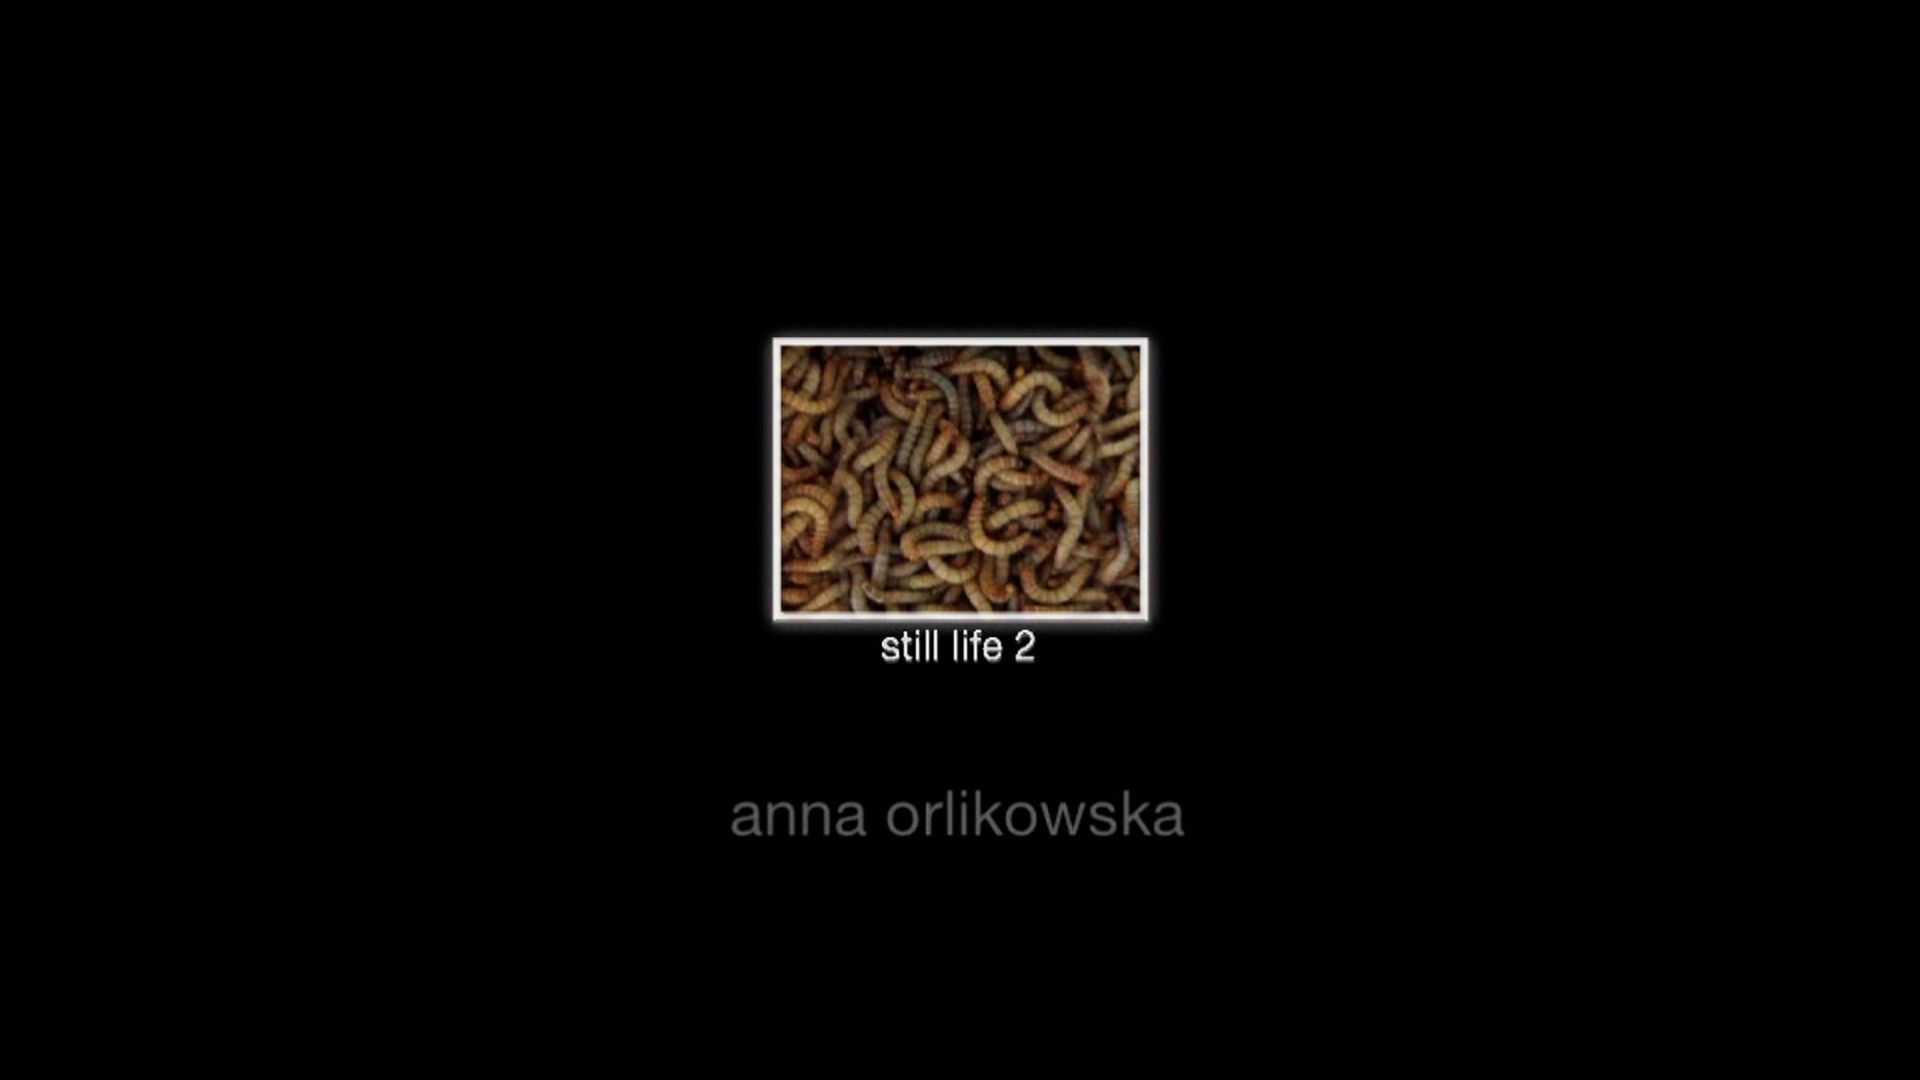 ANNA ORLIKOWSKA 安纳-奥利科夫斯卡

(1979)

静物04-蠕虫电影II

DVD视频，长度约15分钟，2/3版

在珠宝盒内的标签上签名
&hellip;